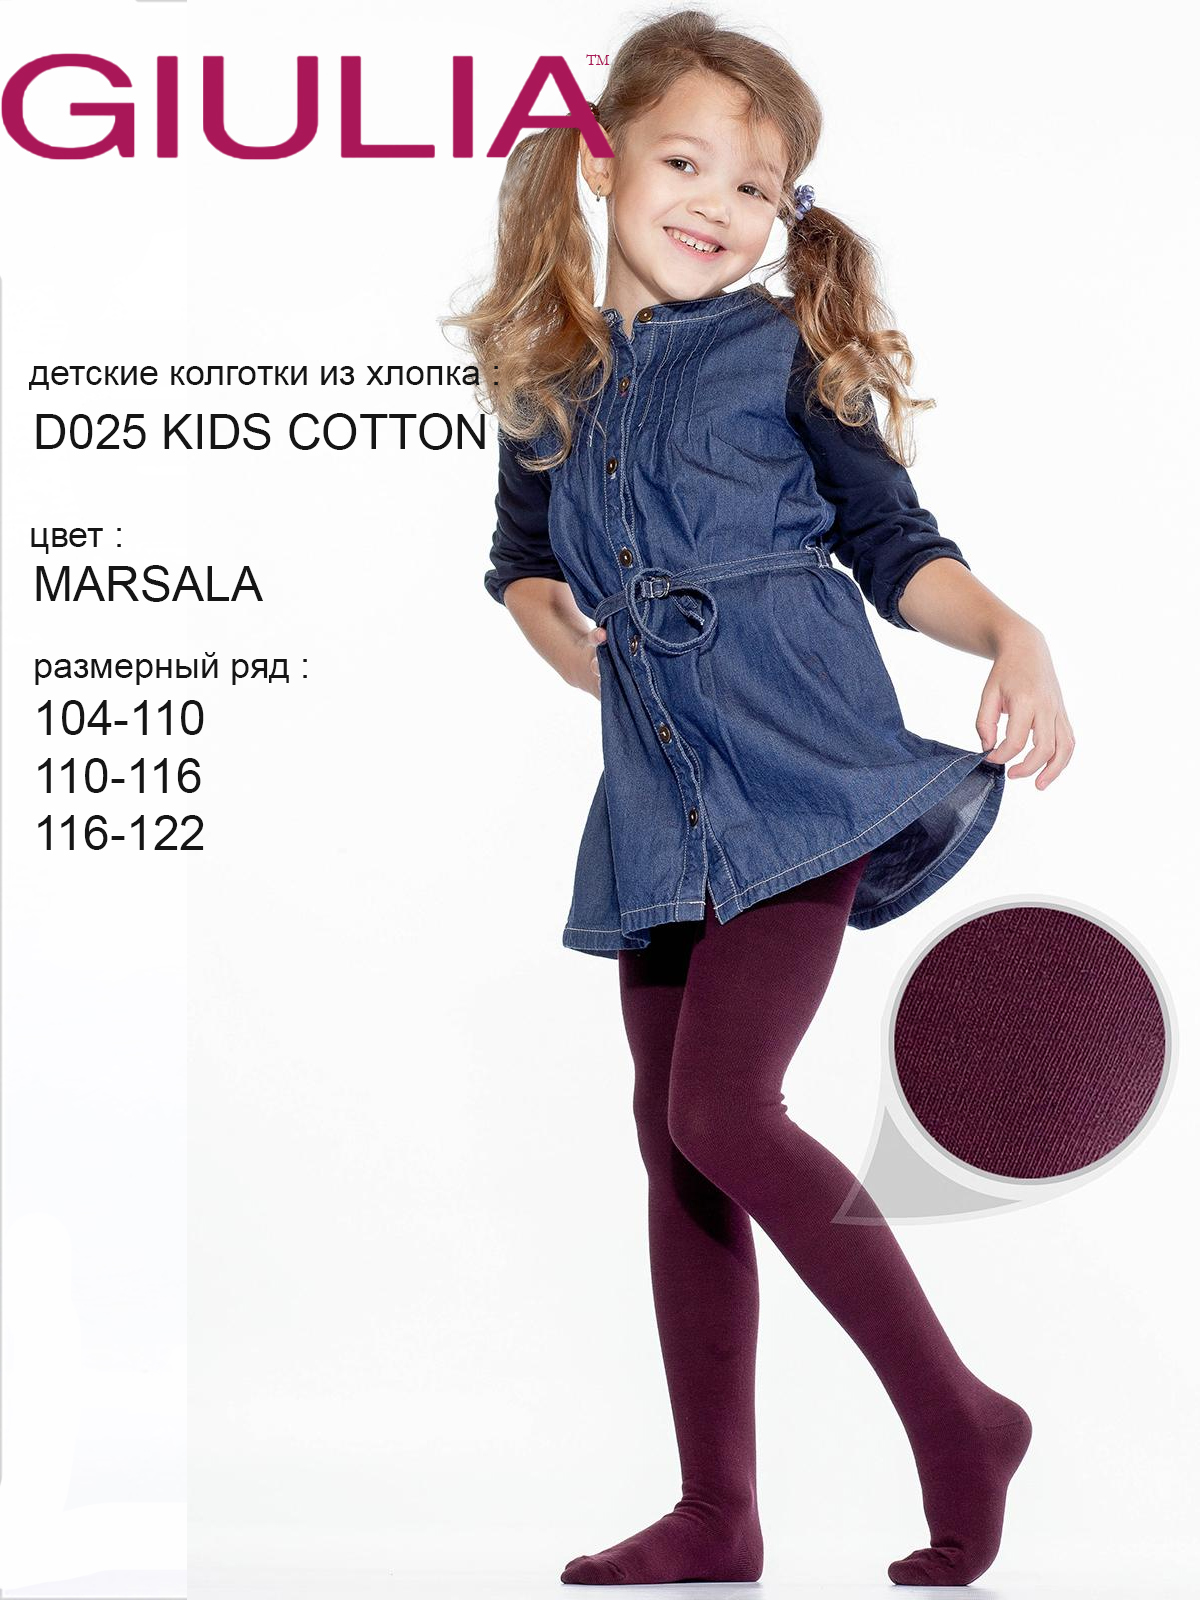 Giulia D025 Kids Cotton от магазина Мир колготок и чулок